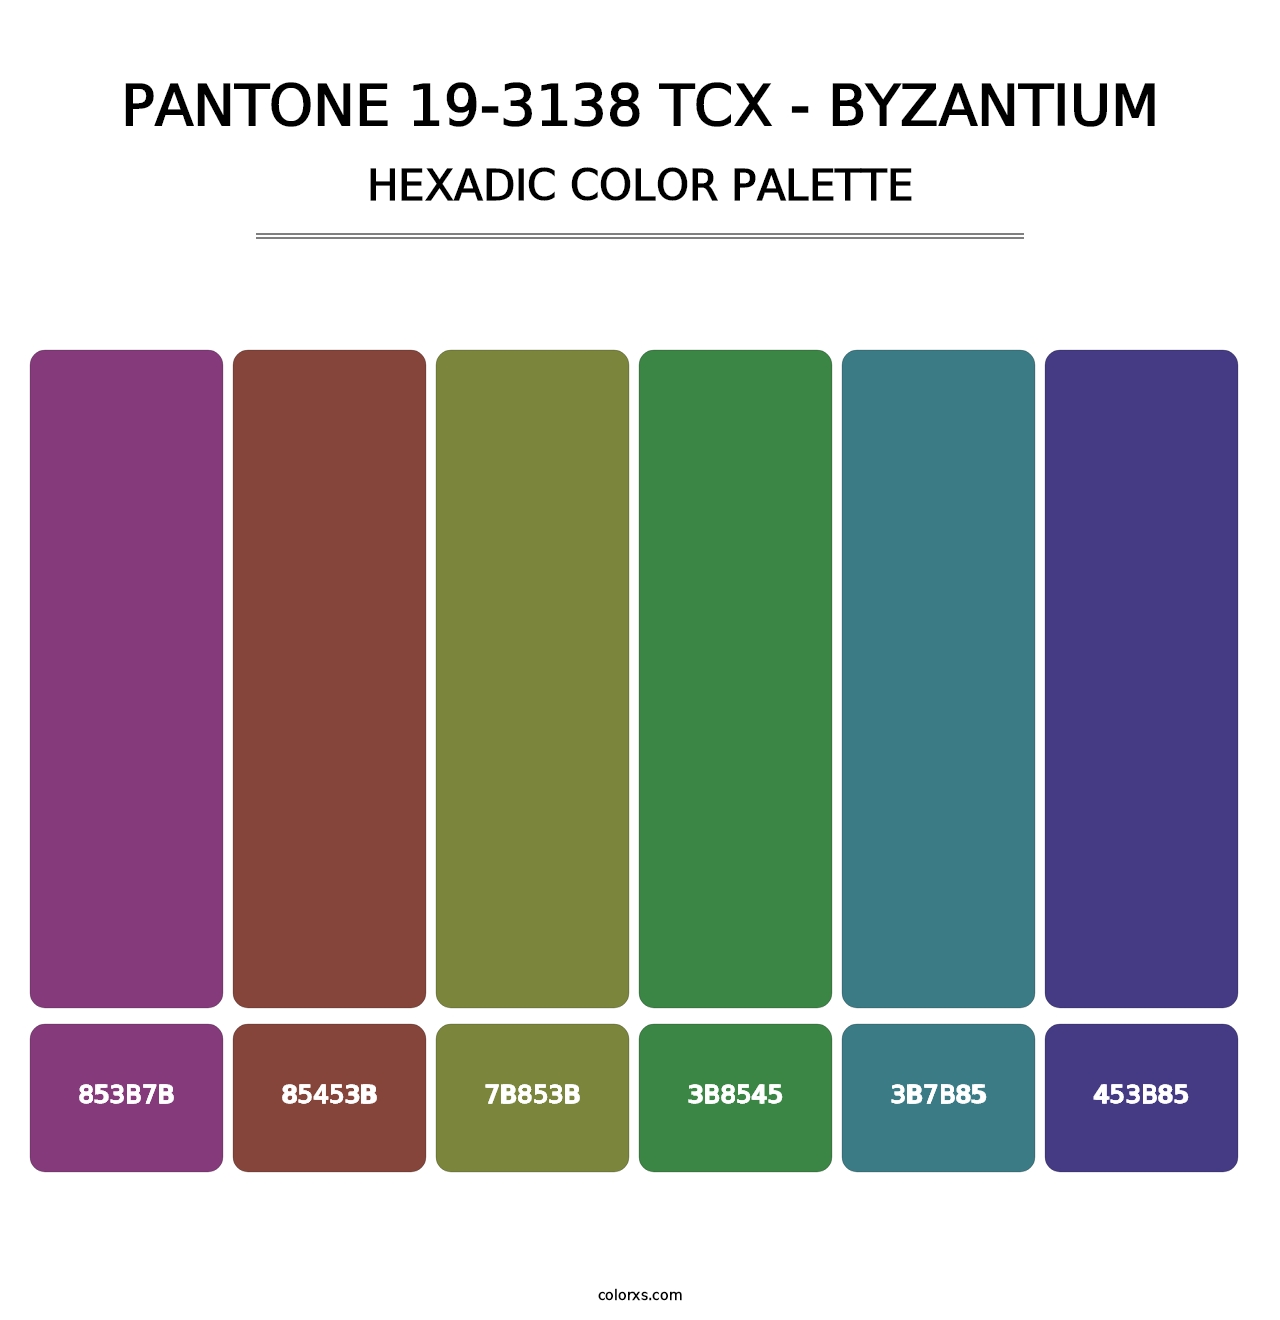 PANTONE 19-3138 TCX - Byzantium - Hexadic Color Palette